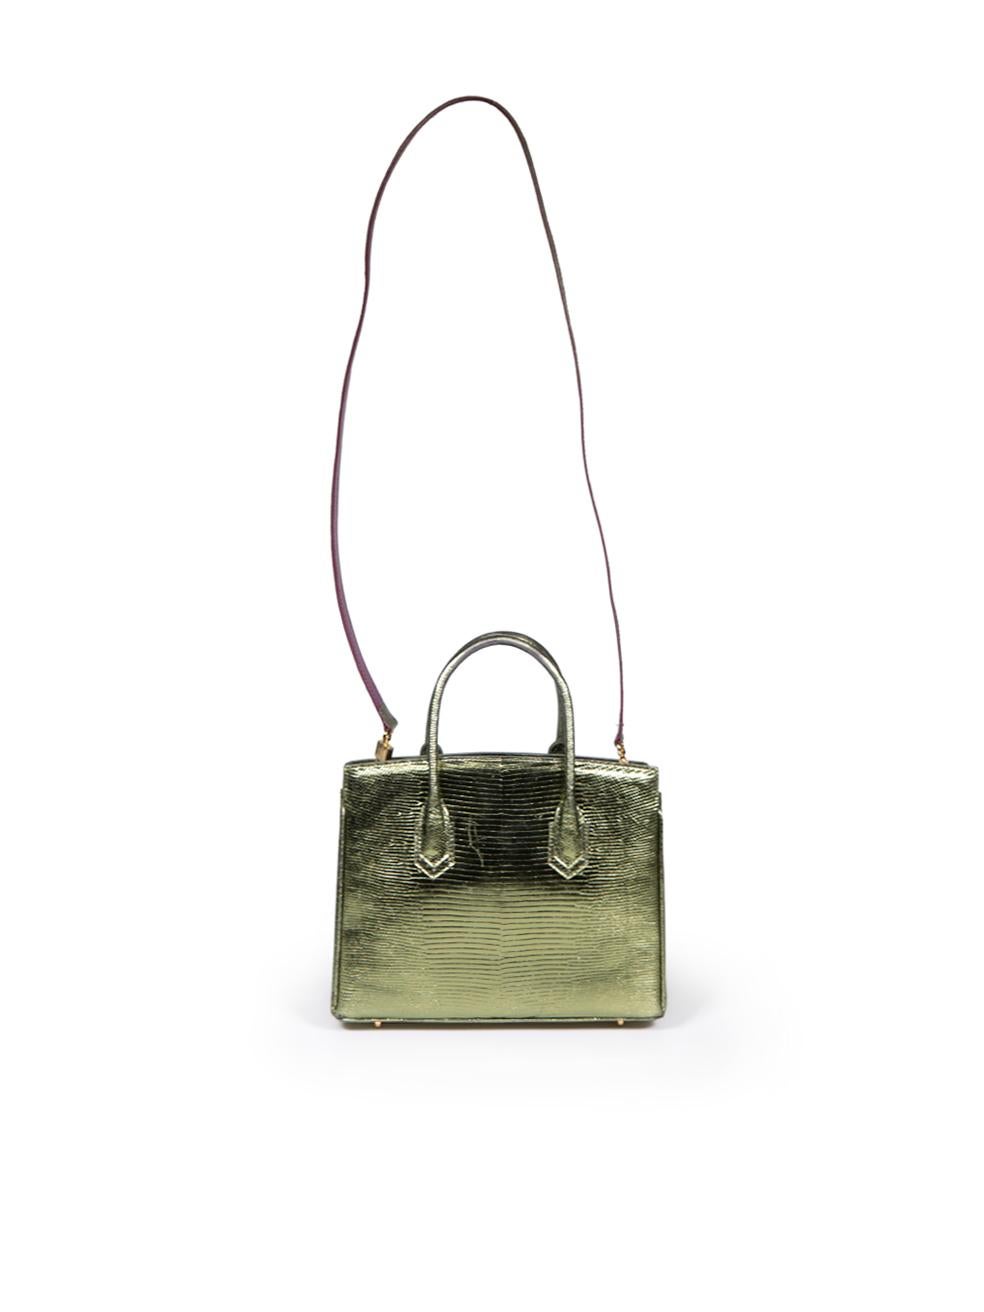 Ethan K Green Lizard Leather Metallic Handbag In Good Condition For Sale In London, GB